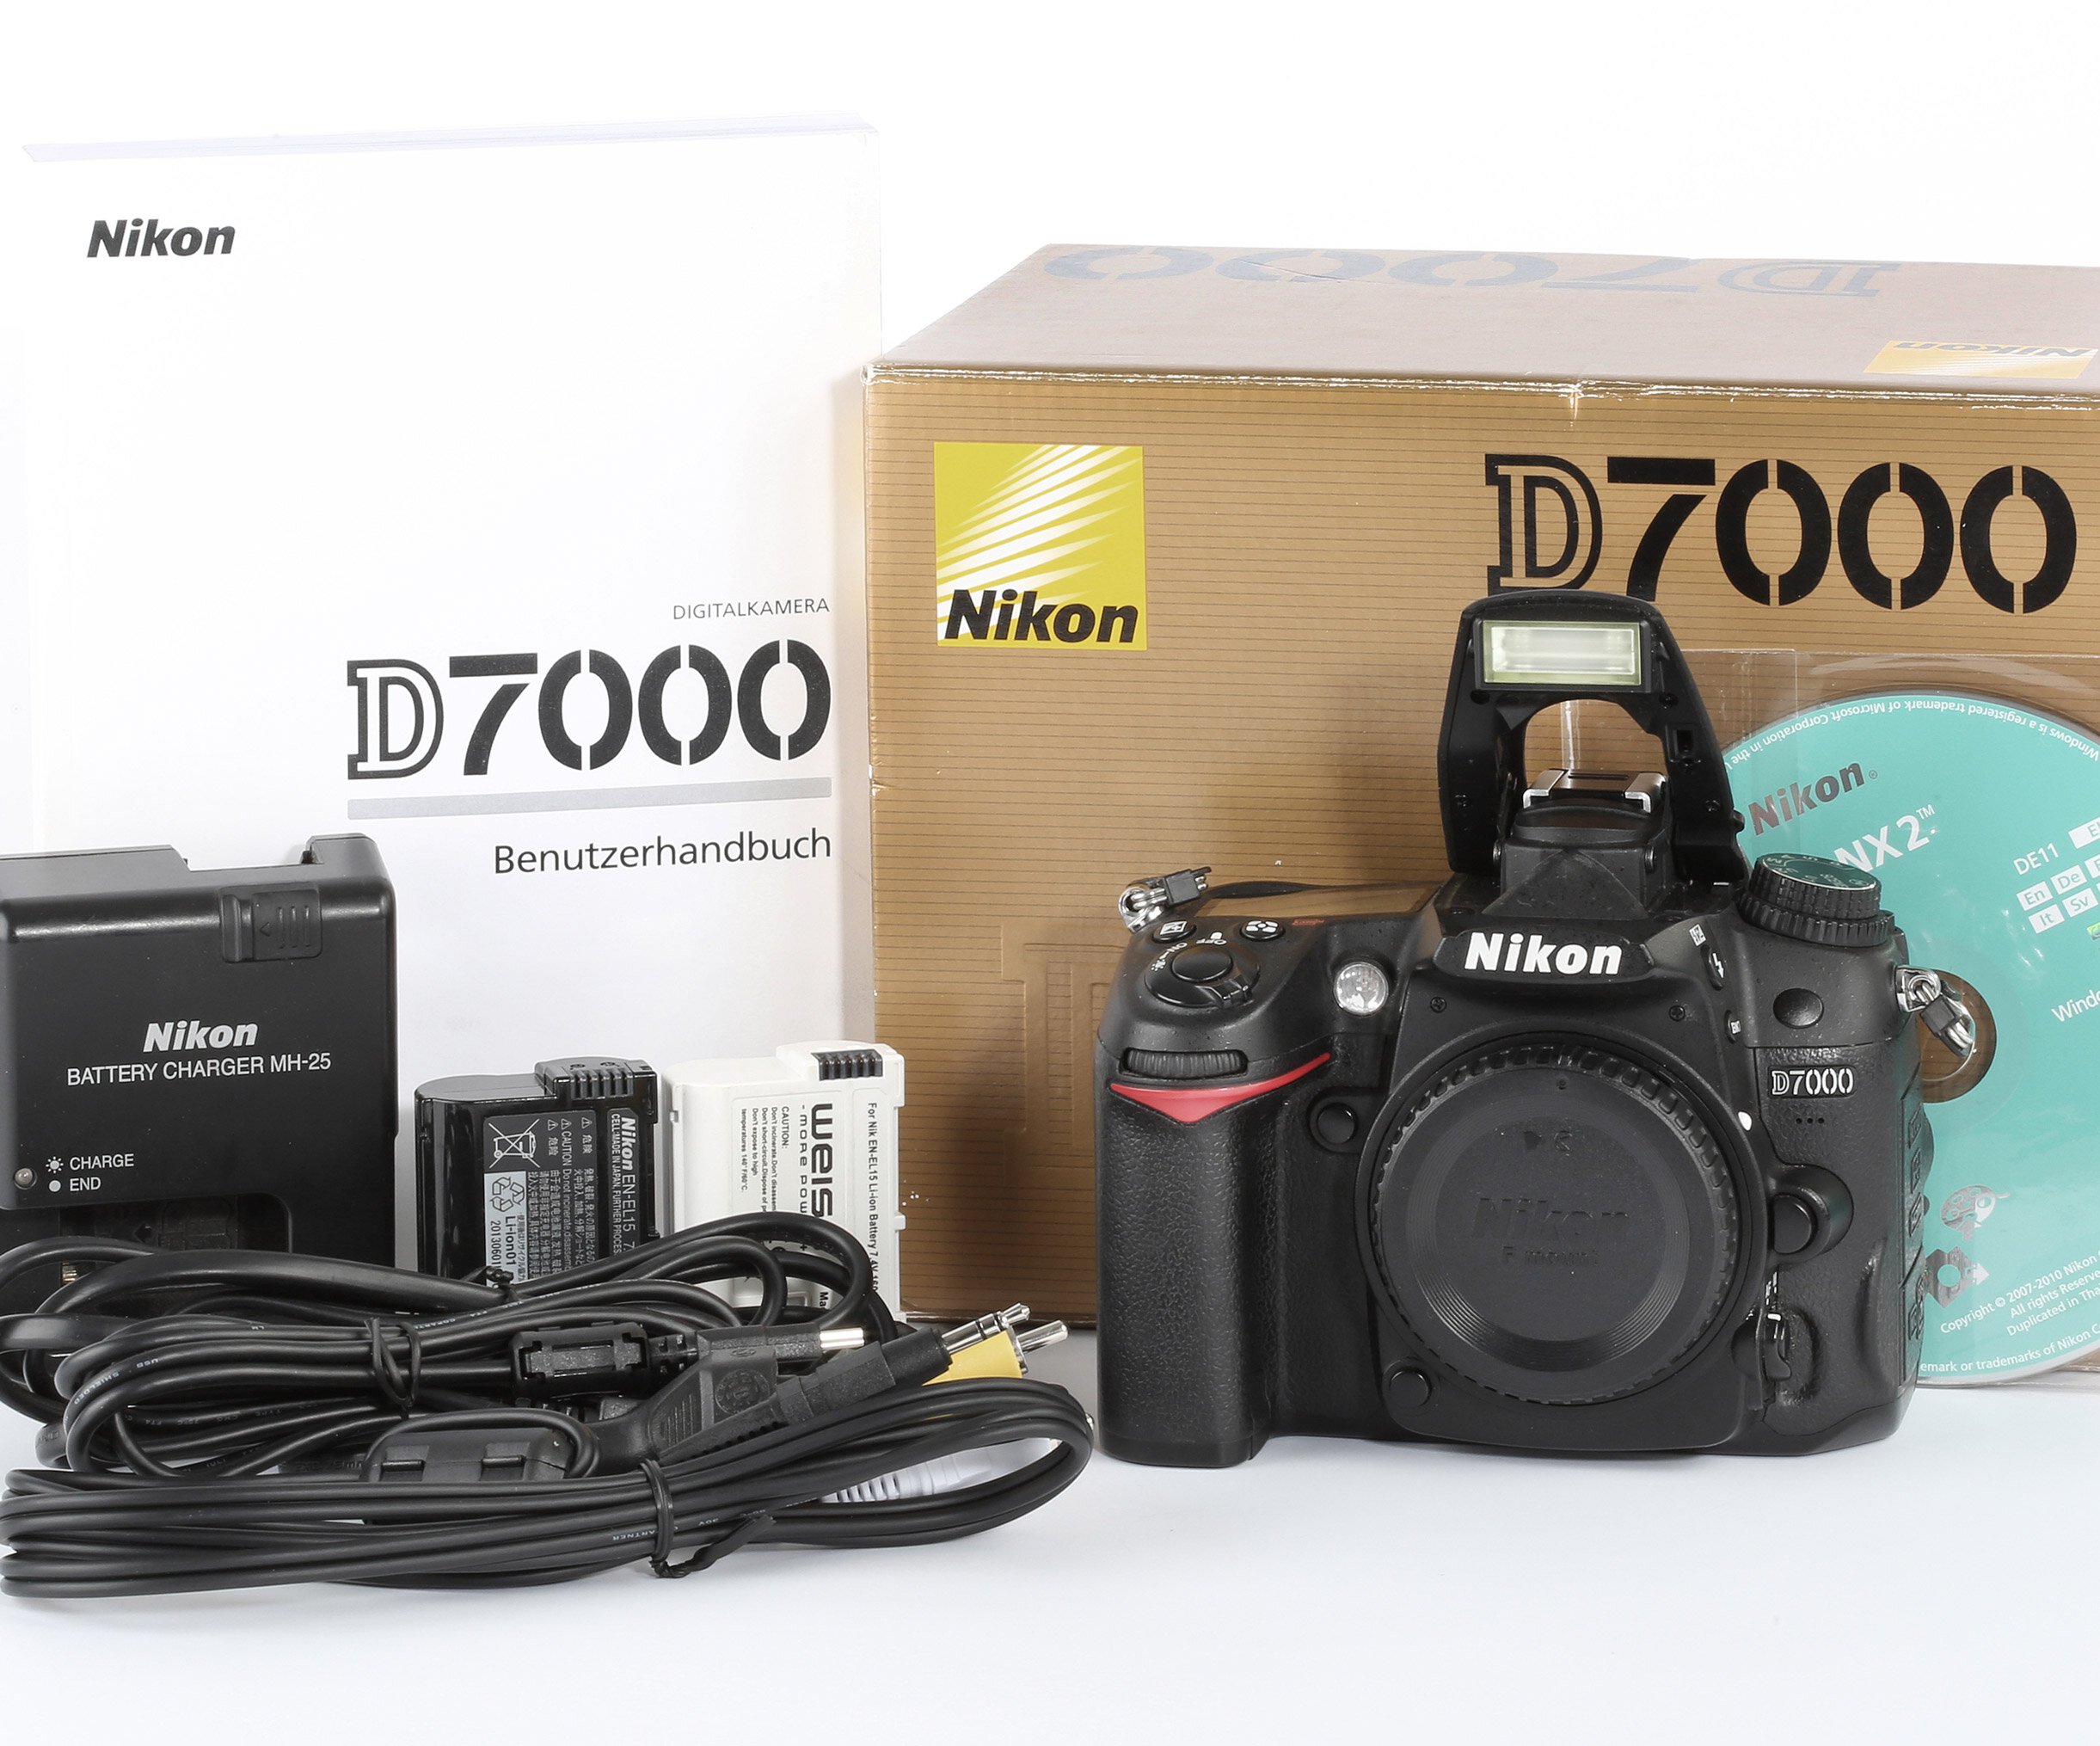 Nikon D7000 Gehäuse  22210 Auslösungen